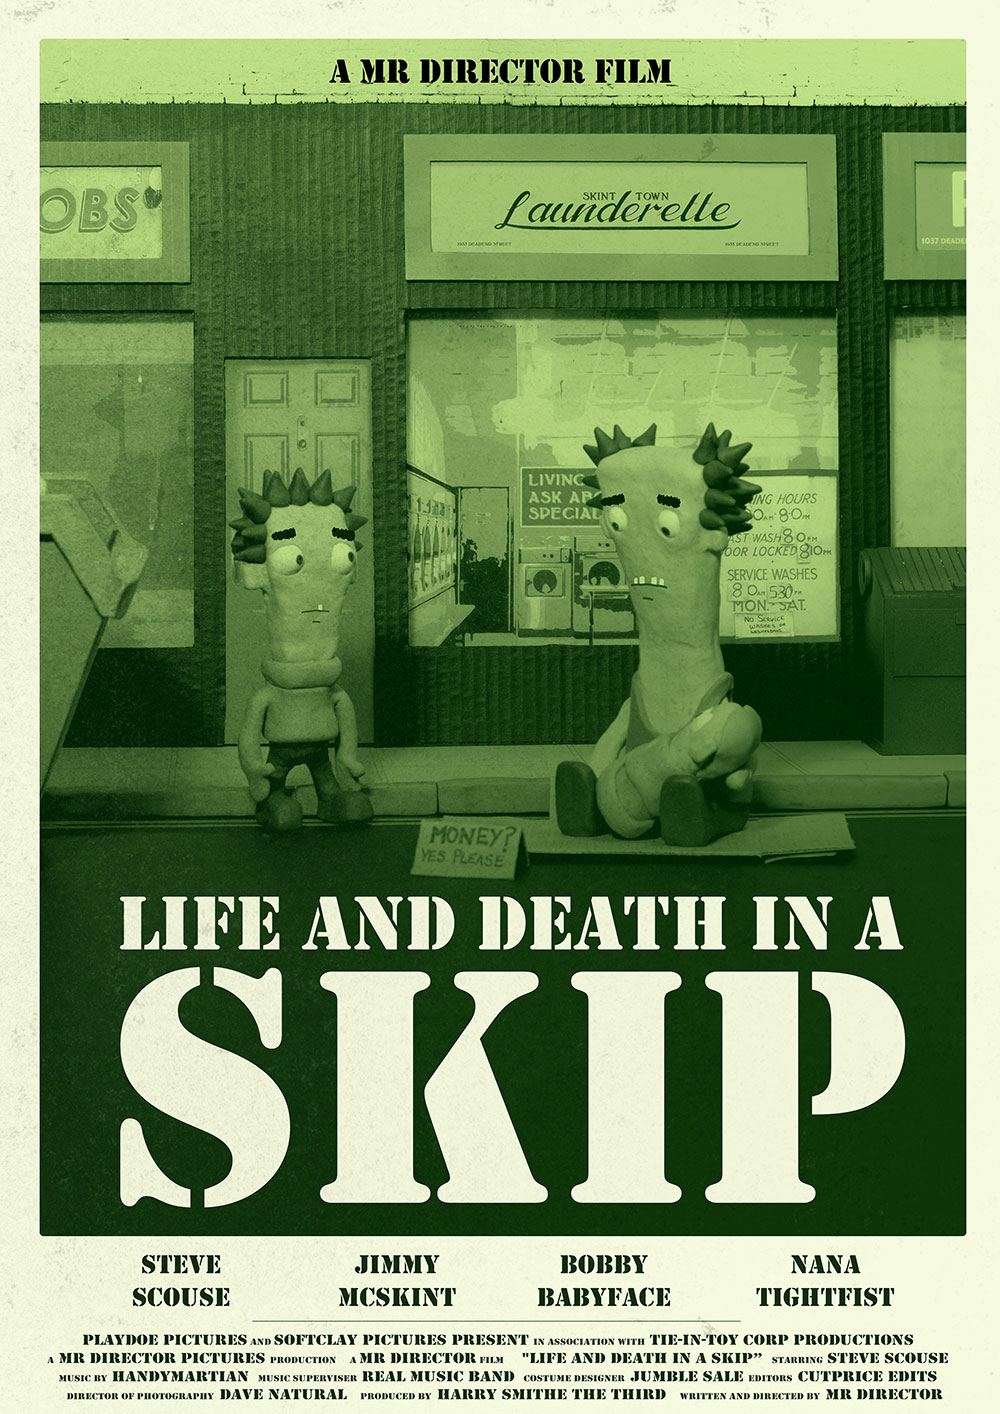 LifeAndDeathInASkip-poster01.jpg